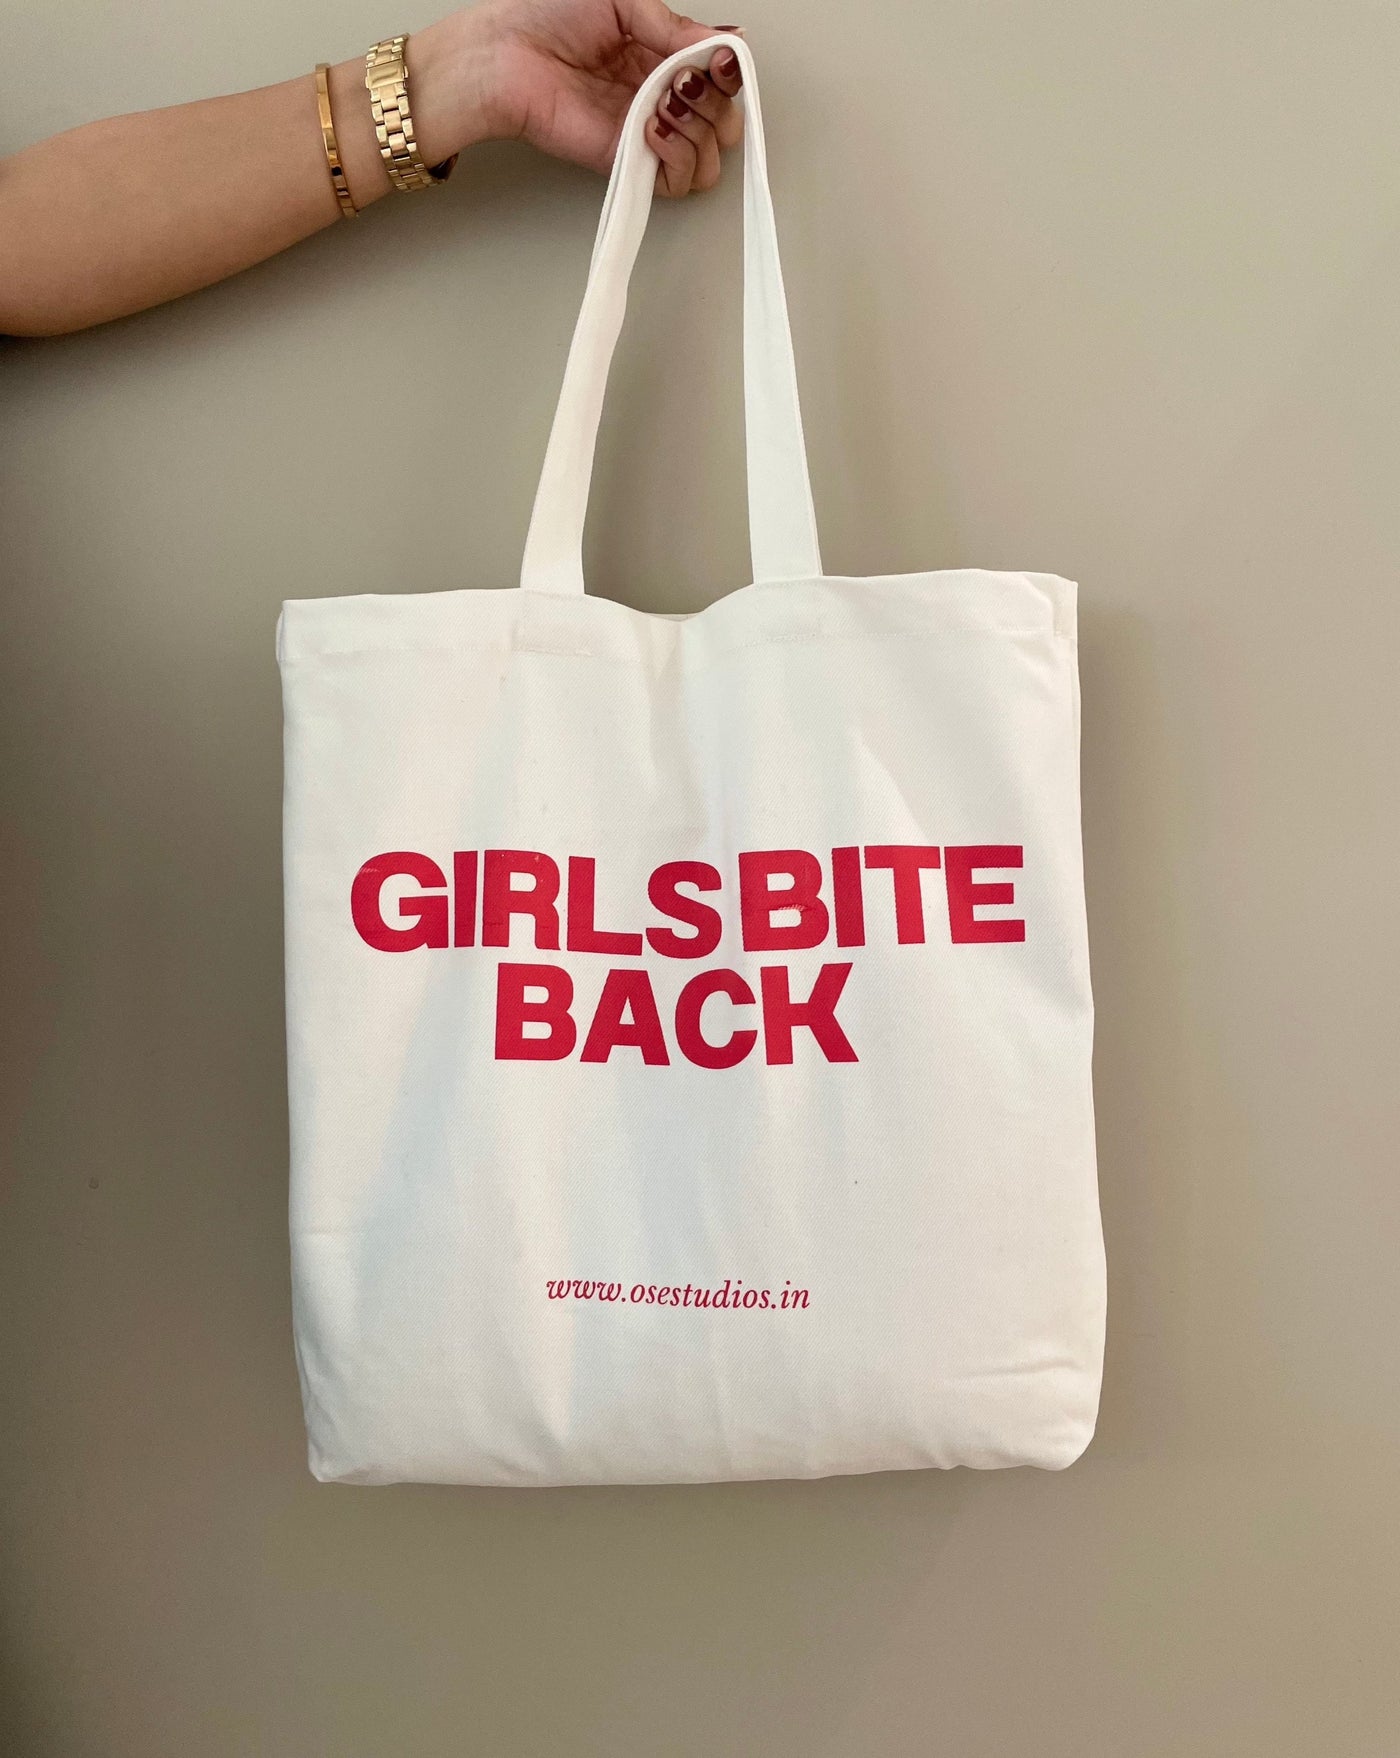 Osé Studios Hair Accessories Girls bite back cloth bag